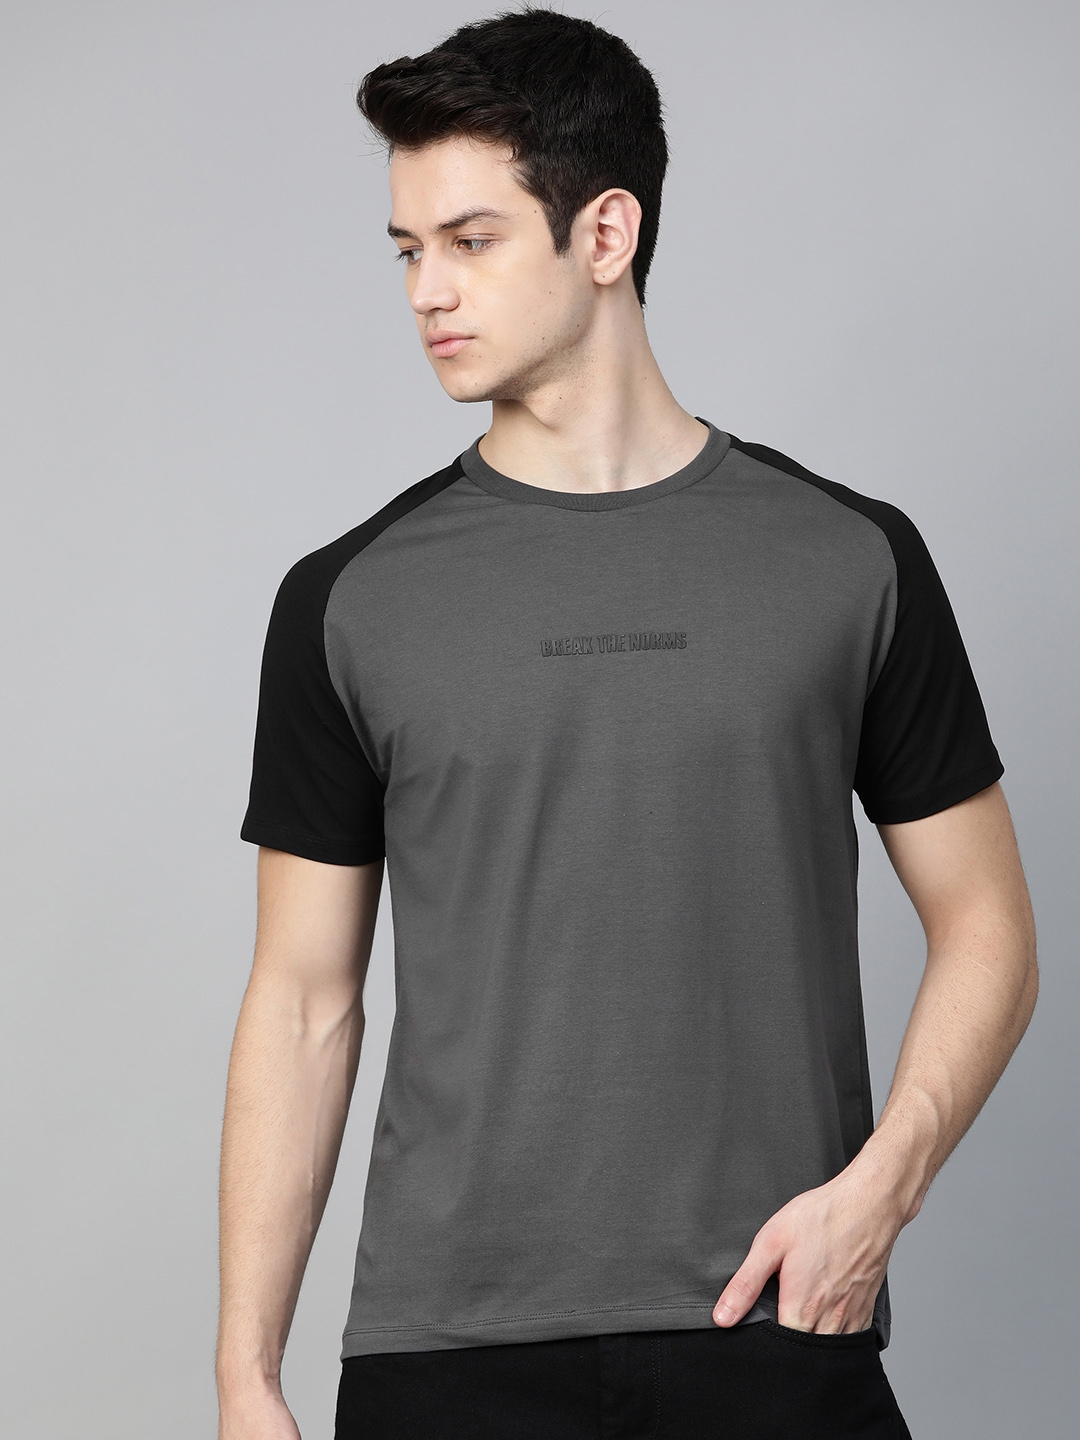 Roadster Men Charcoal Grey   Black Solid Round Neck T shirt